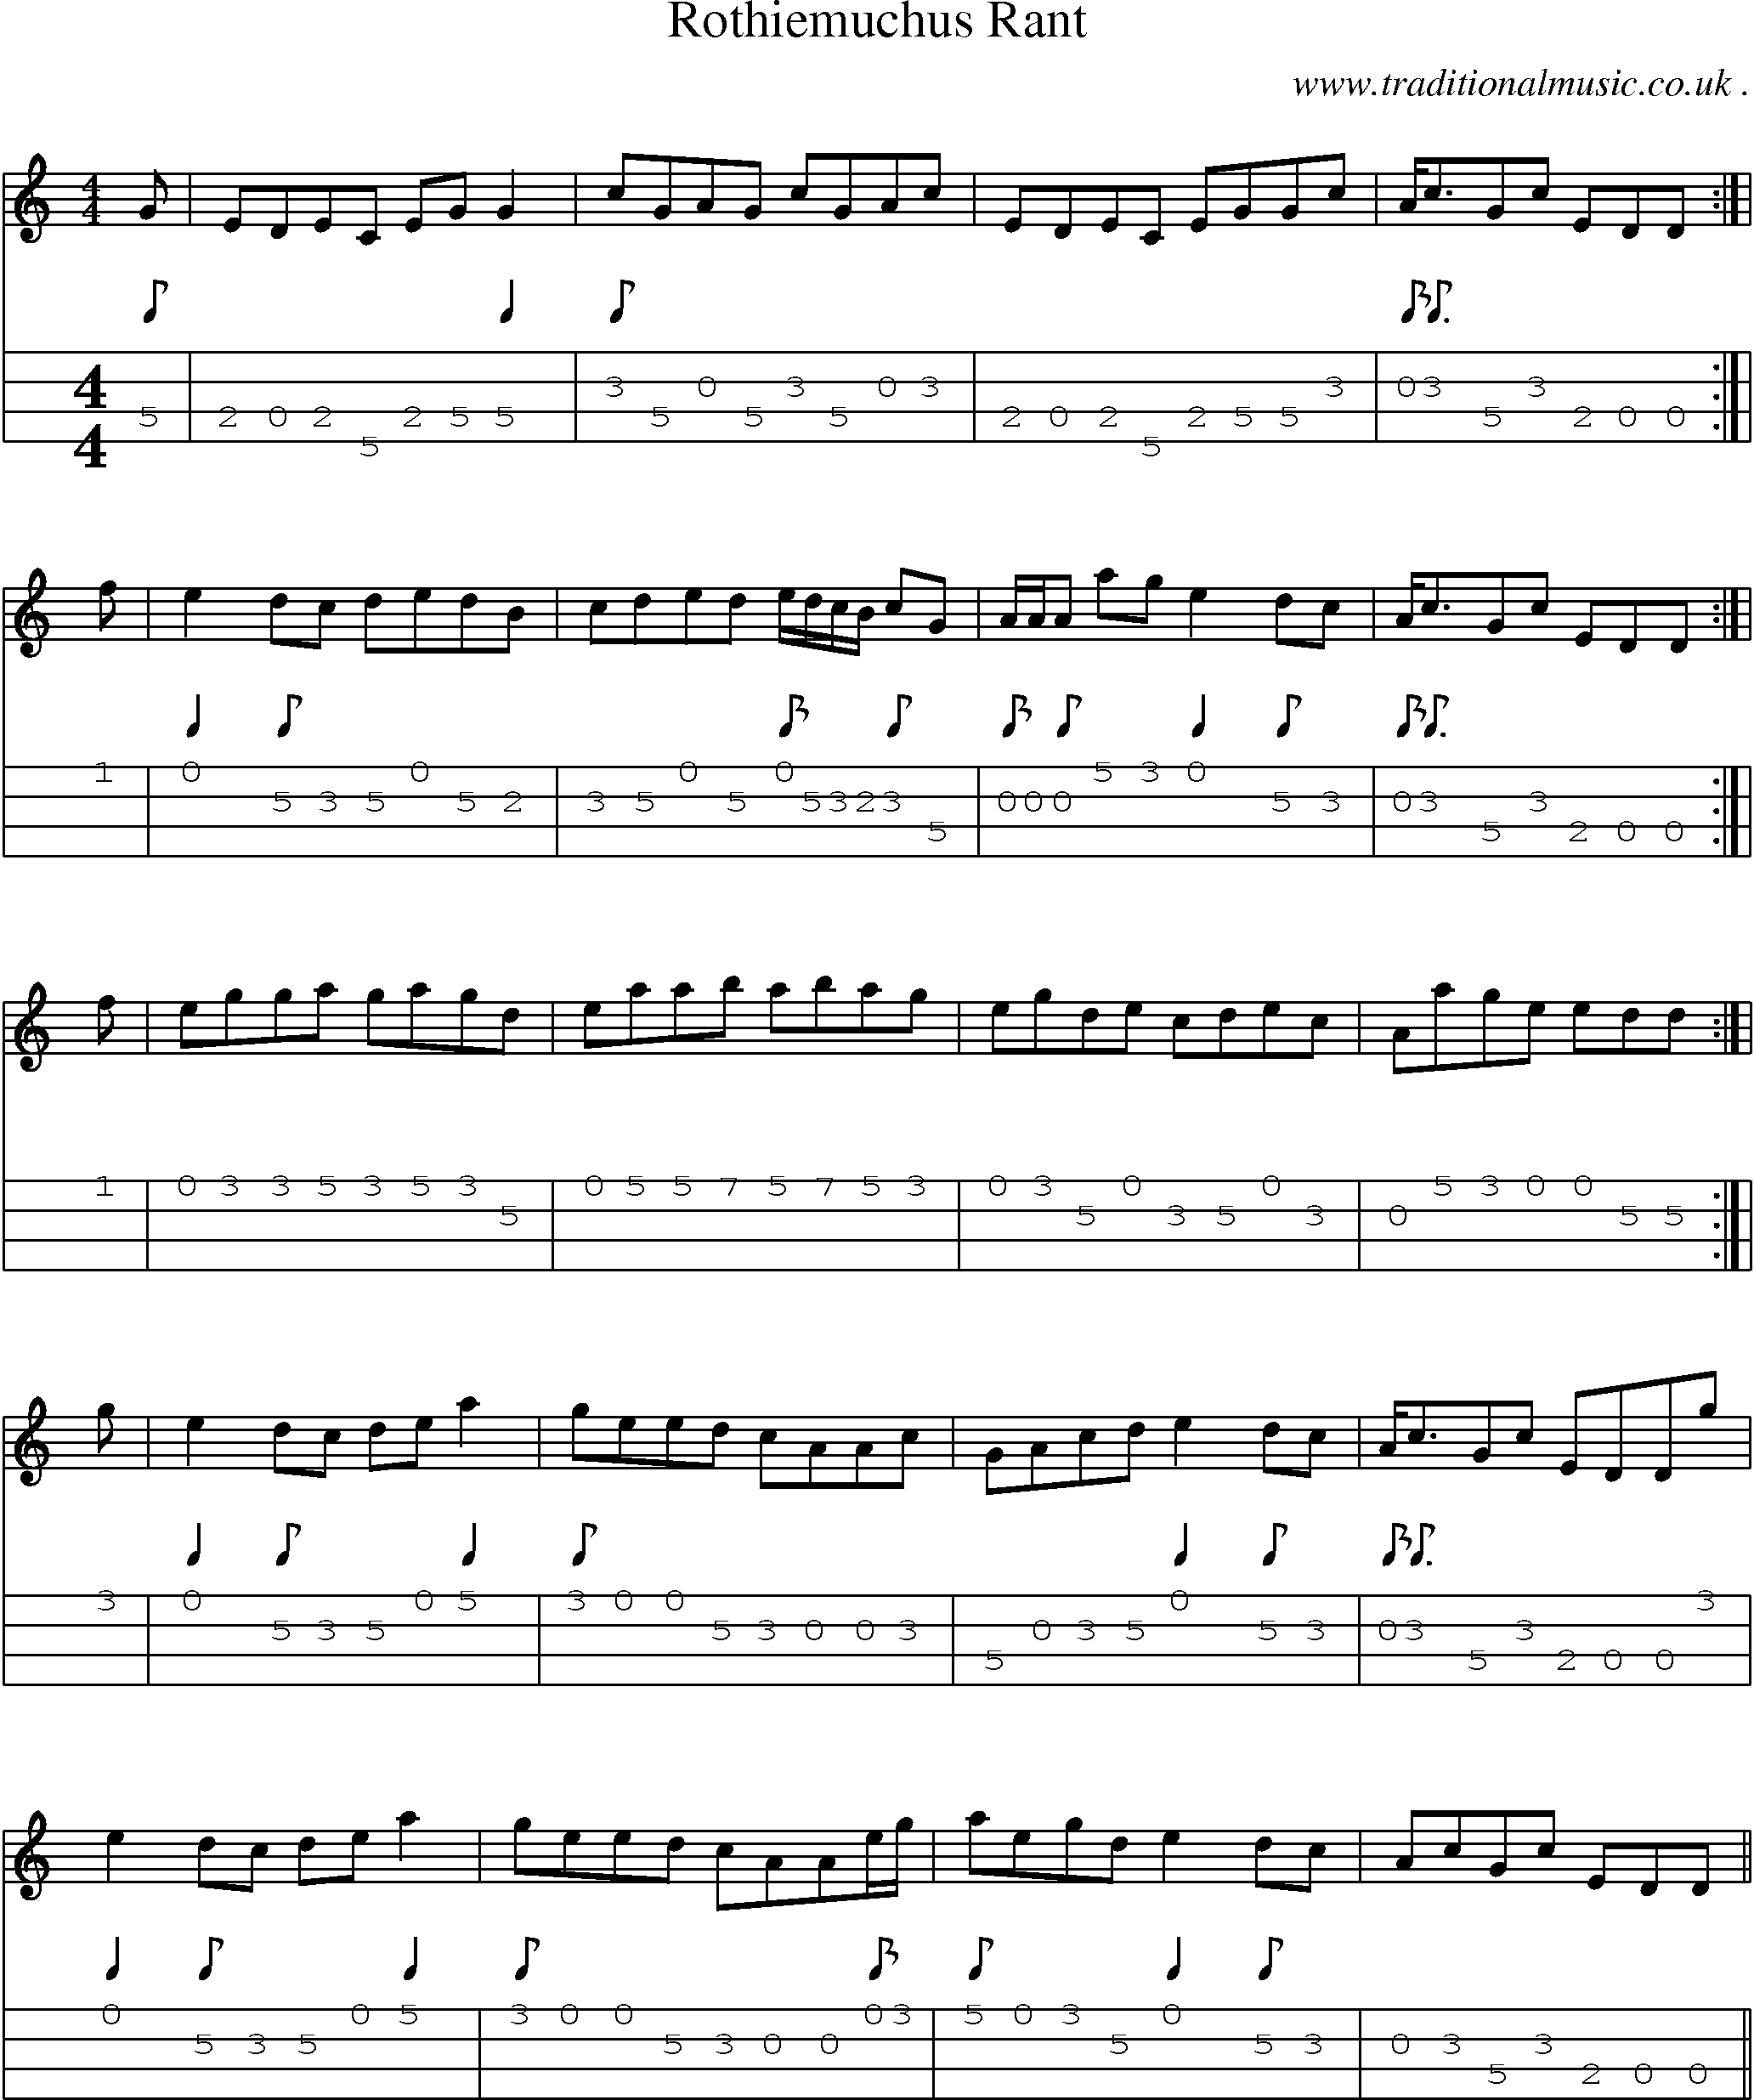 Sheet-Music and Mandolin Tabs for Rothiemuchus Rant